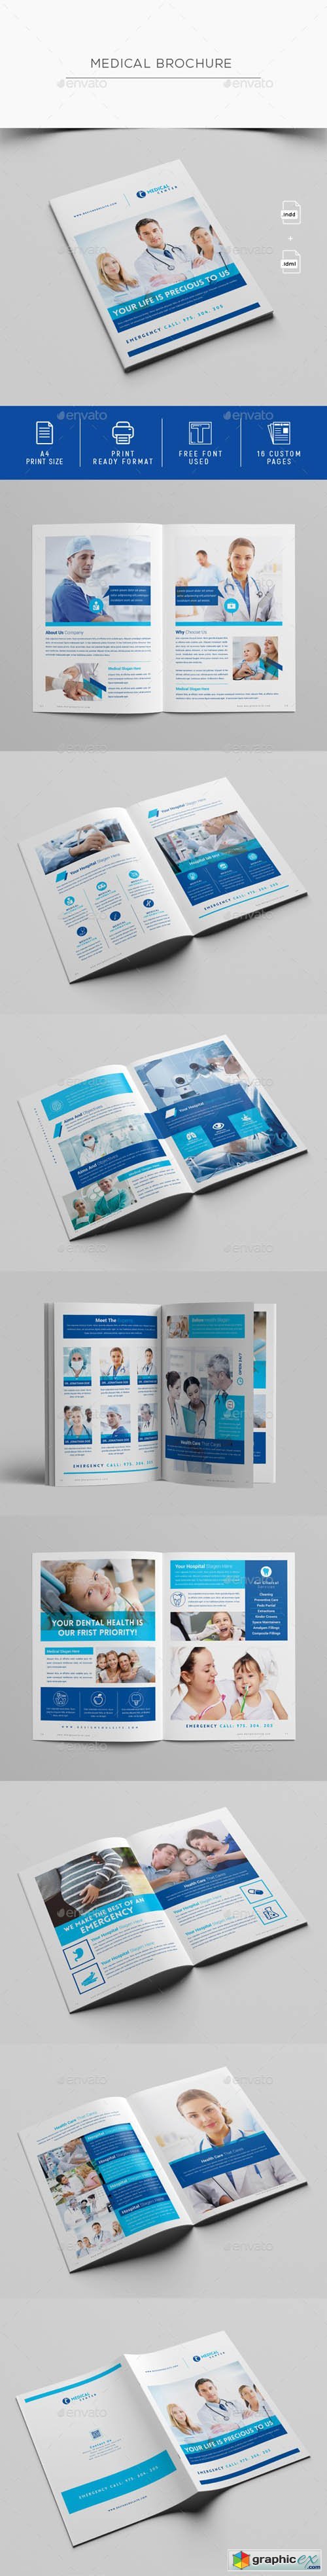 Medical Brochure Template